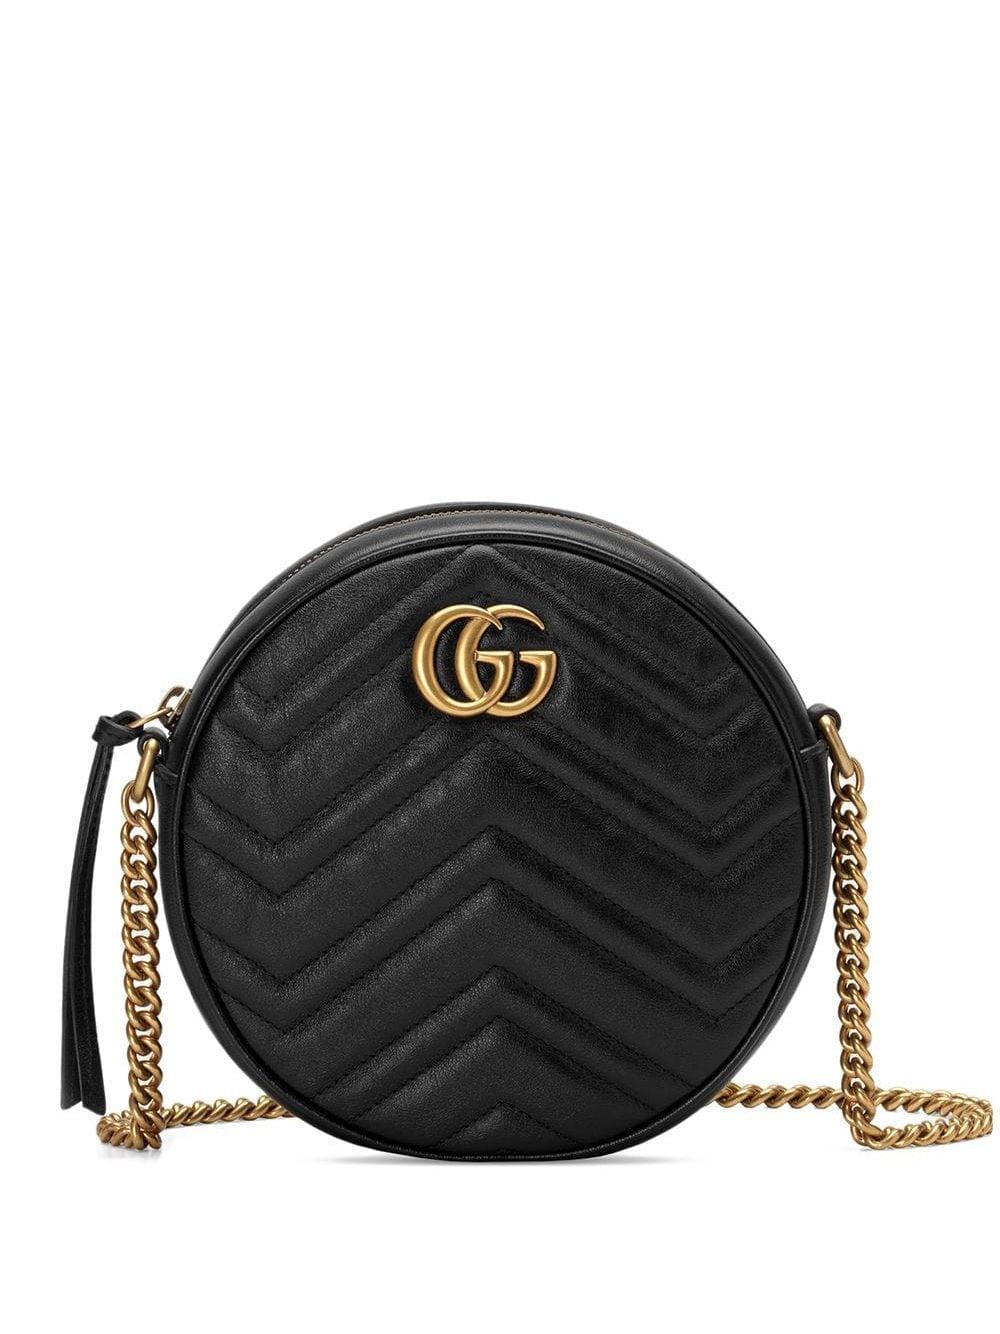 Gucci Leather GG Marmont Mini Round Shoulder Bag in m.White/m.White (White) - Save 40% - Lyst